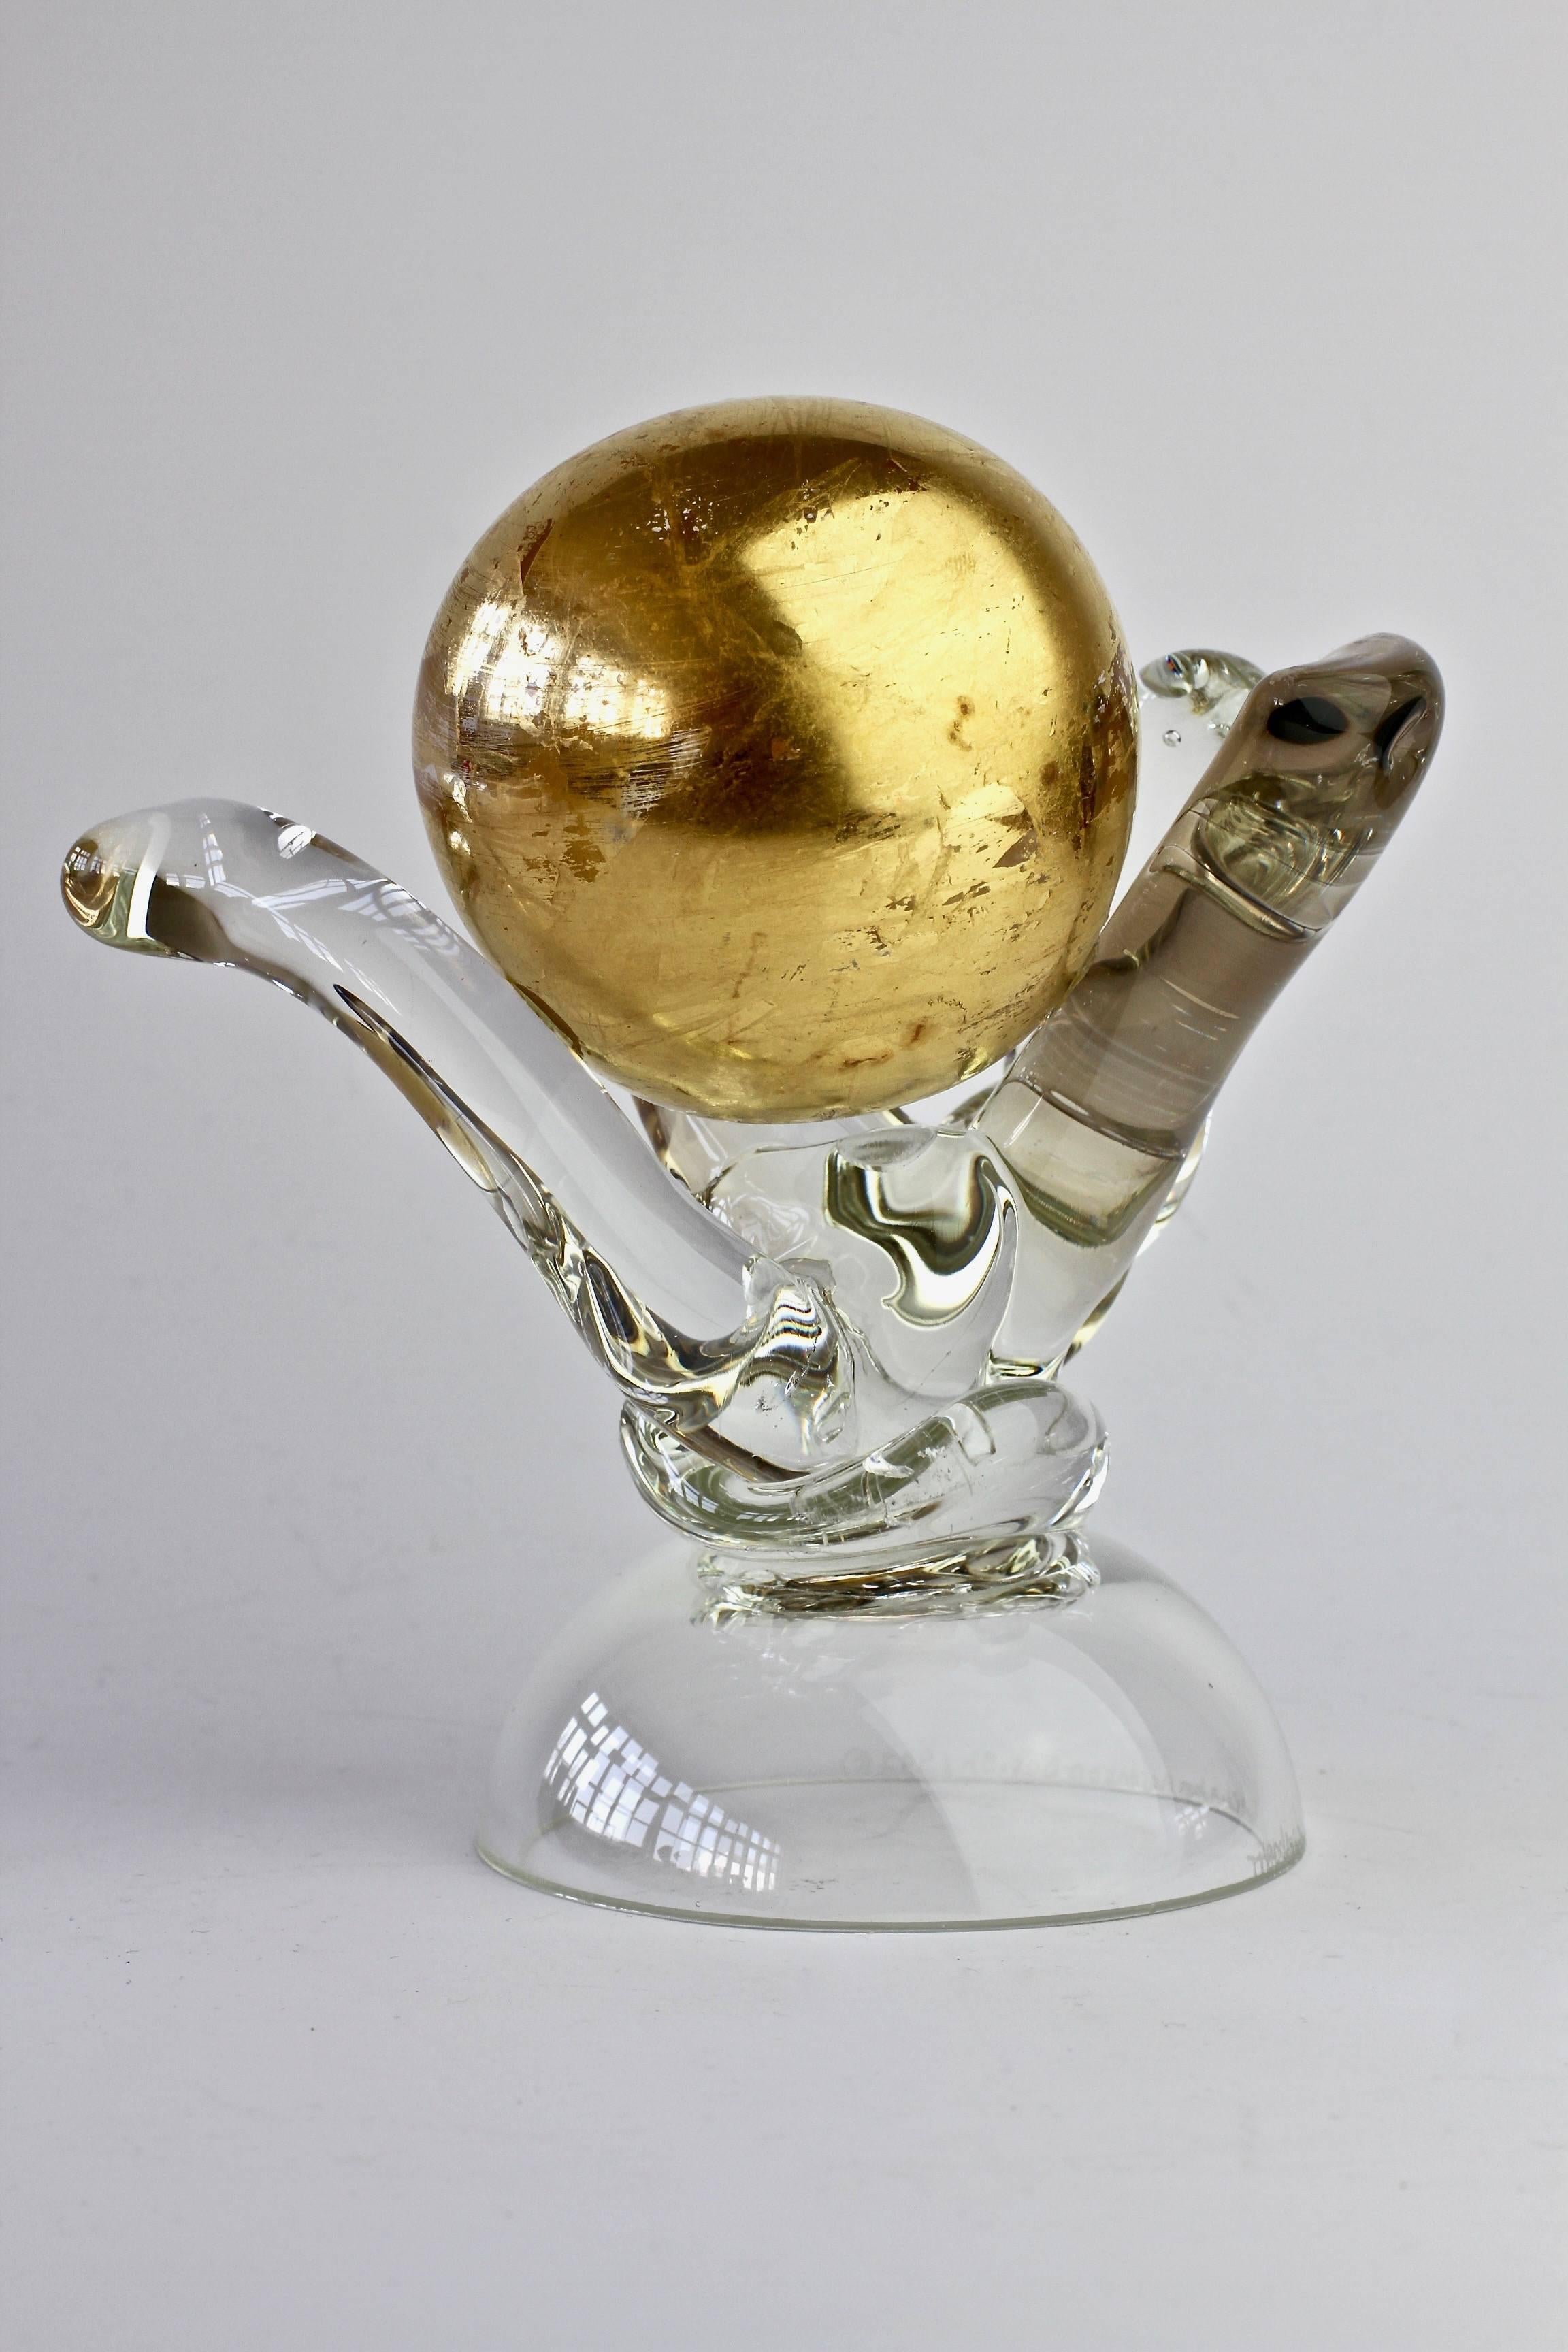 Modern British Studio Art Glass 'Golden Globe' Sculpture signed by Adam Aaronson, 1997 For Sale